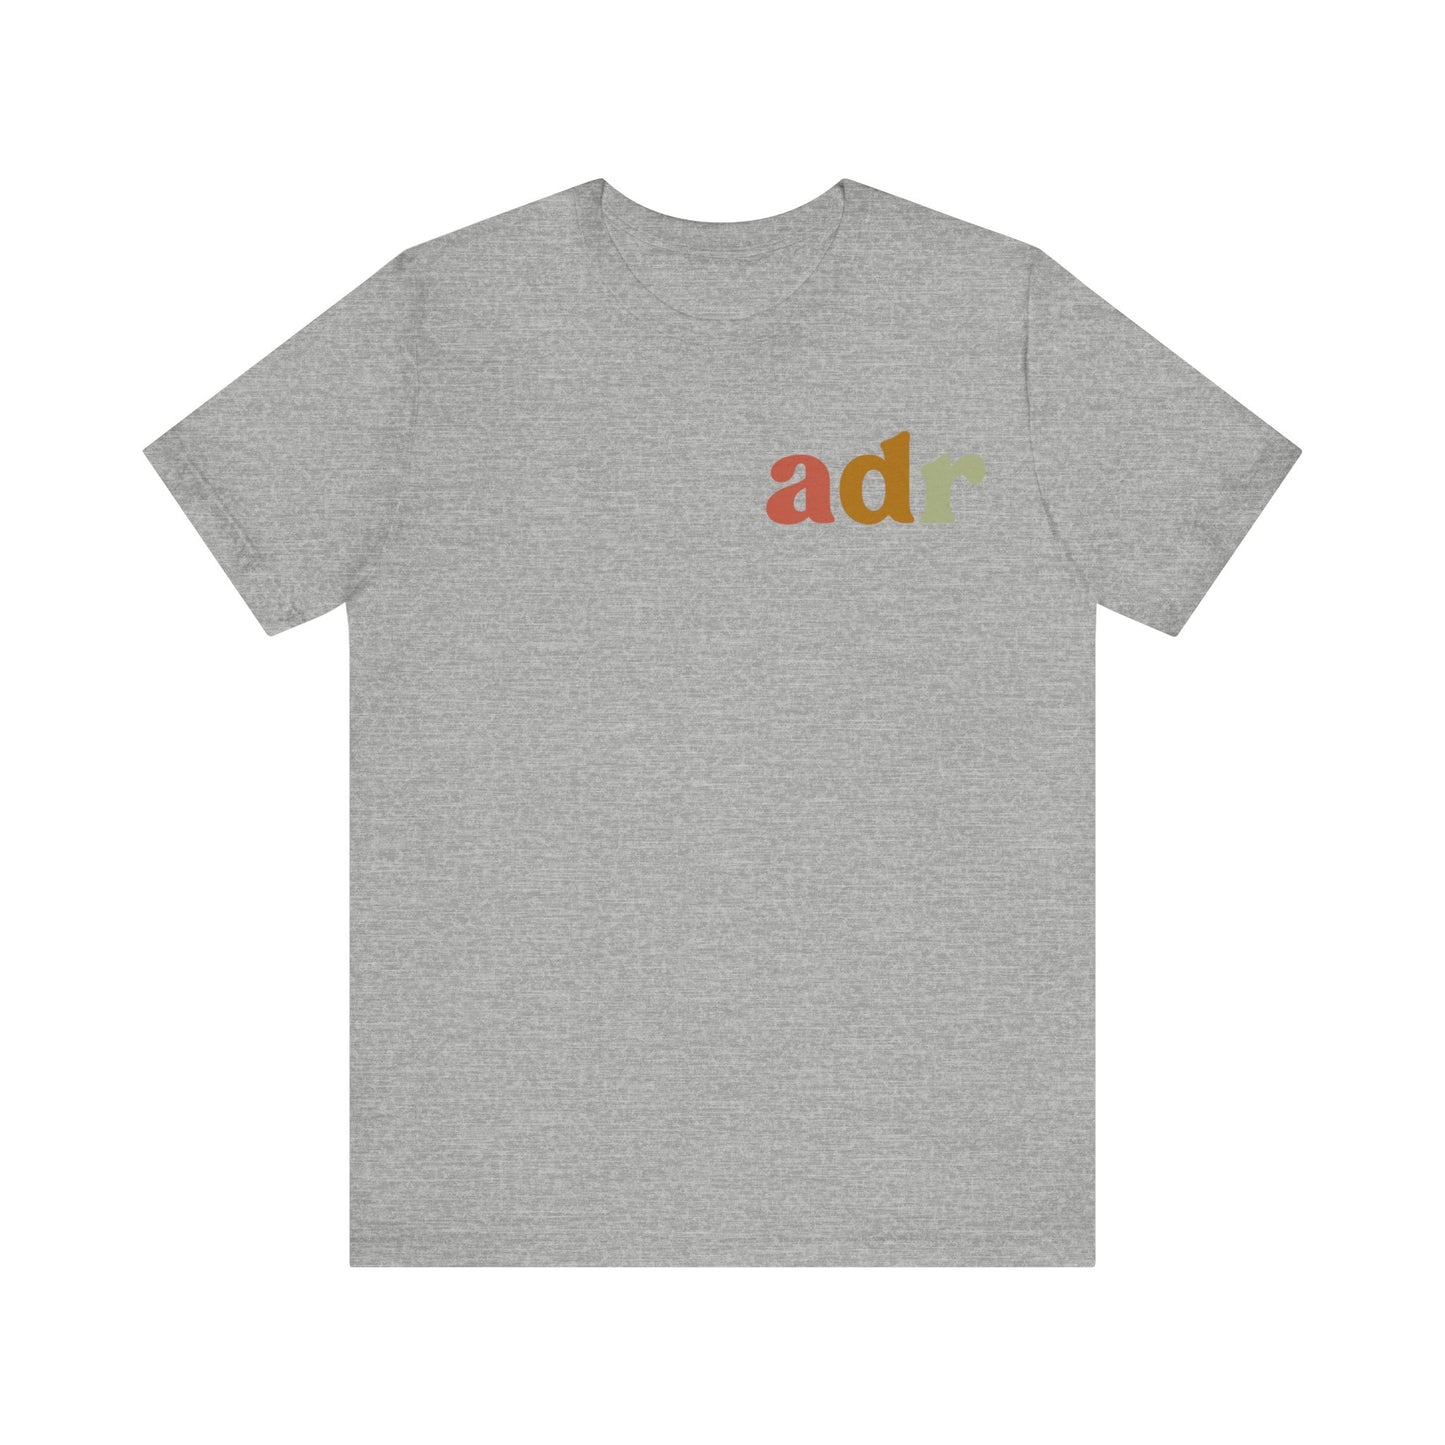 ADR Shirt, Ain't Doin' Right Shirt, Vet Tech Shirt, Vet Staff Gift, Doctor of Veterinary Medicine Shirt, Funny Vet Tech Shirt, T1069